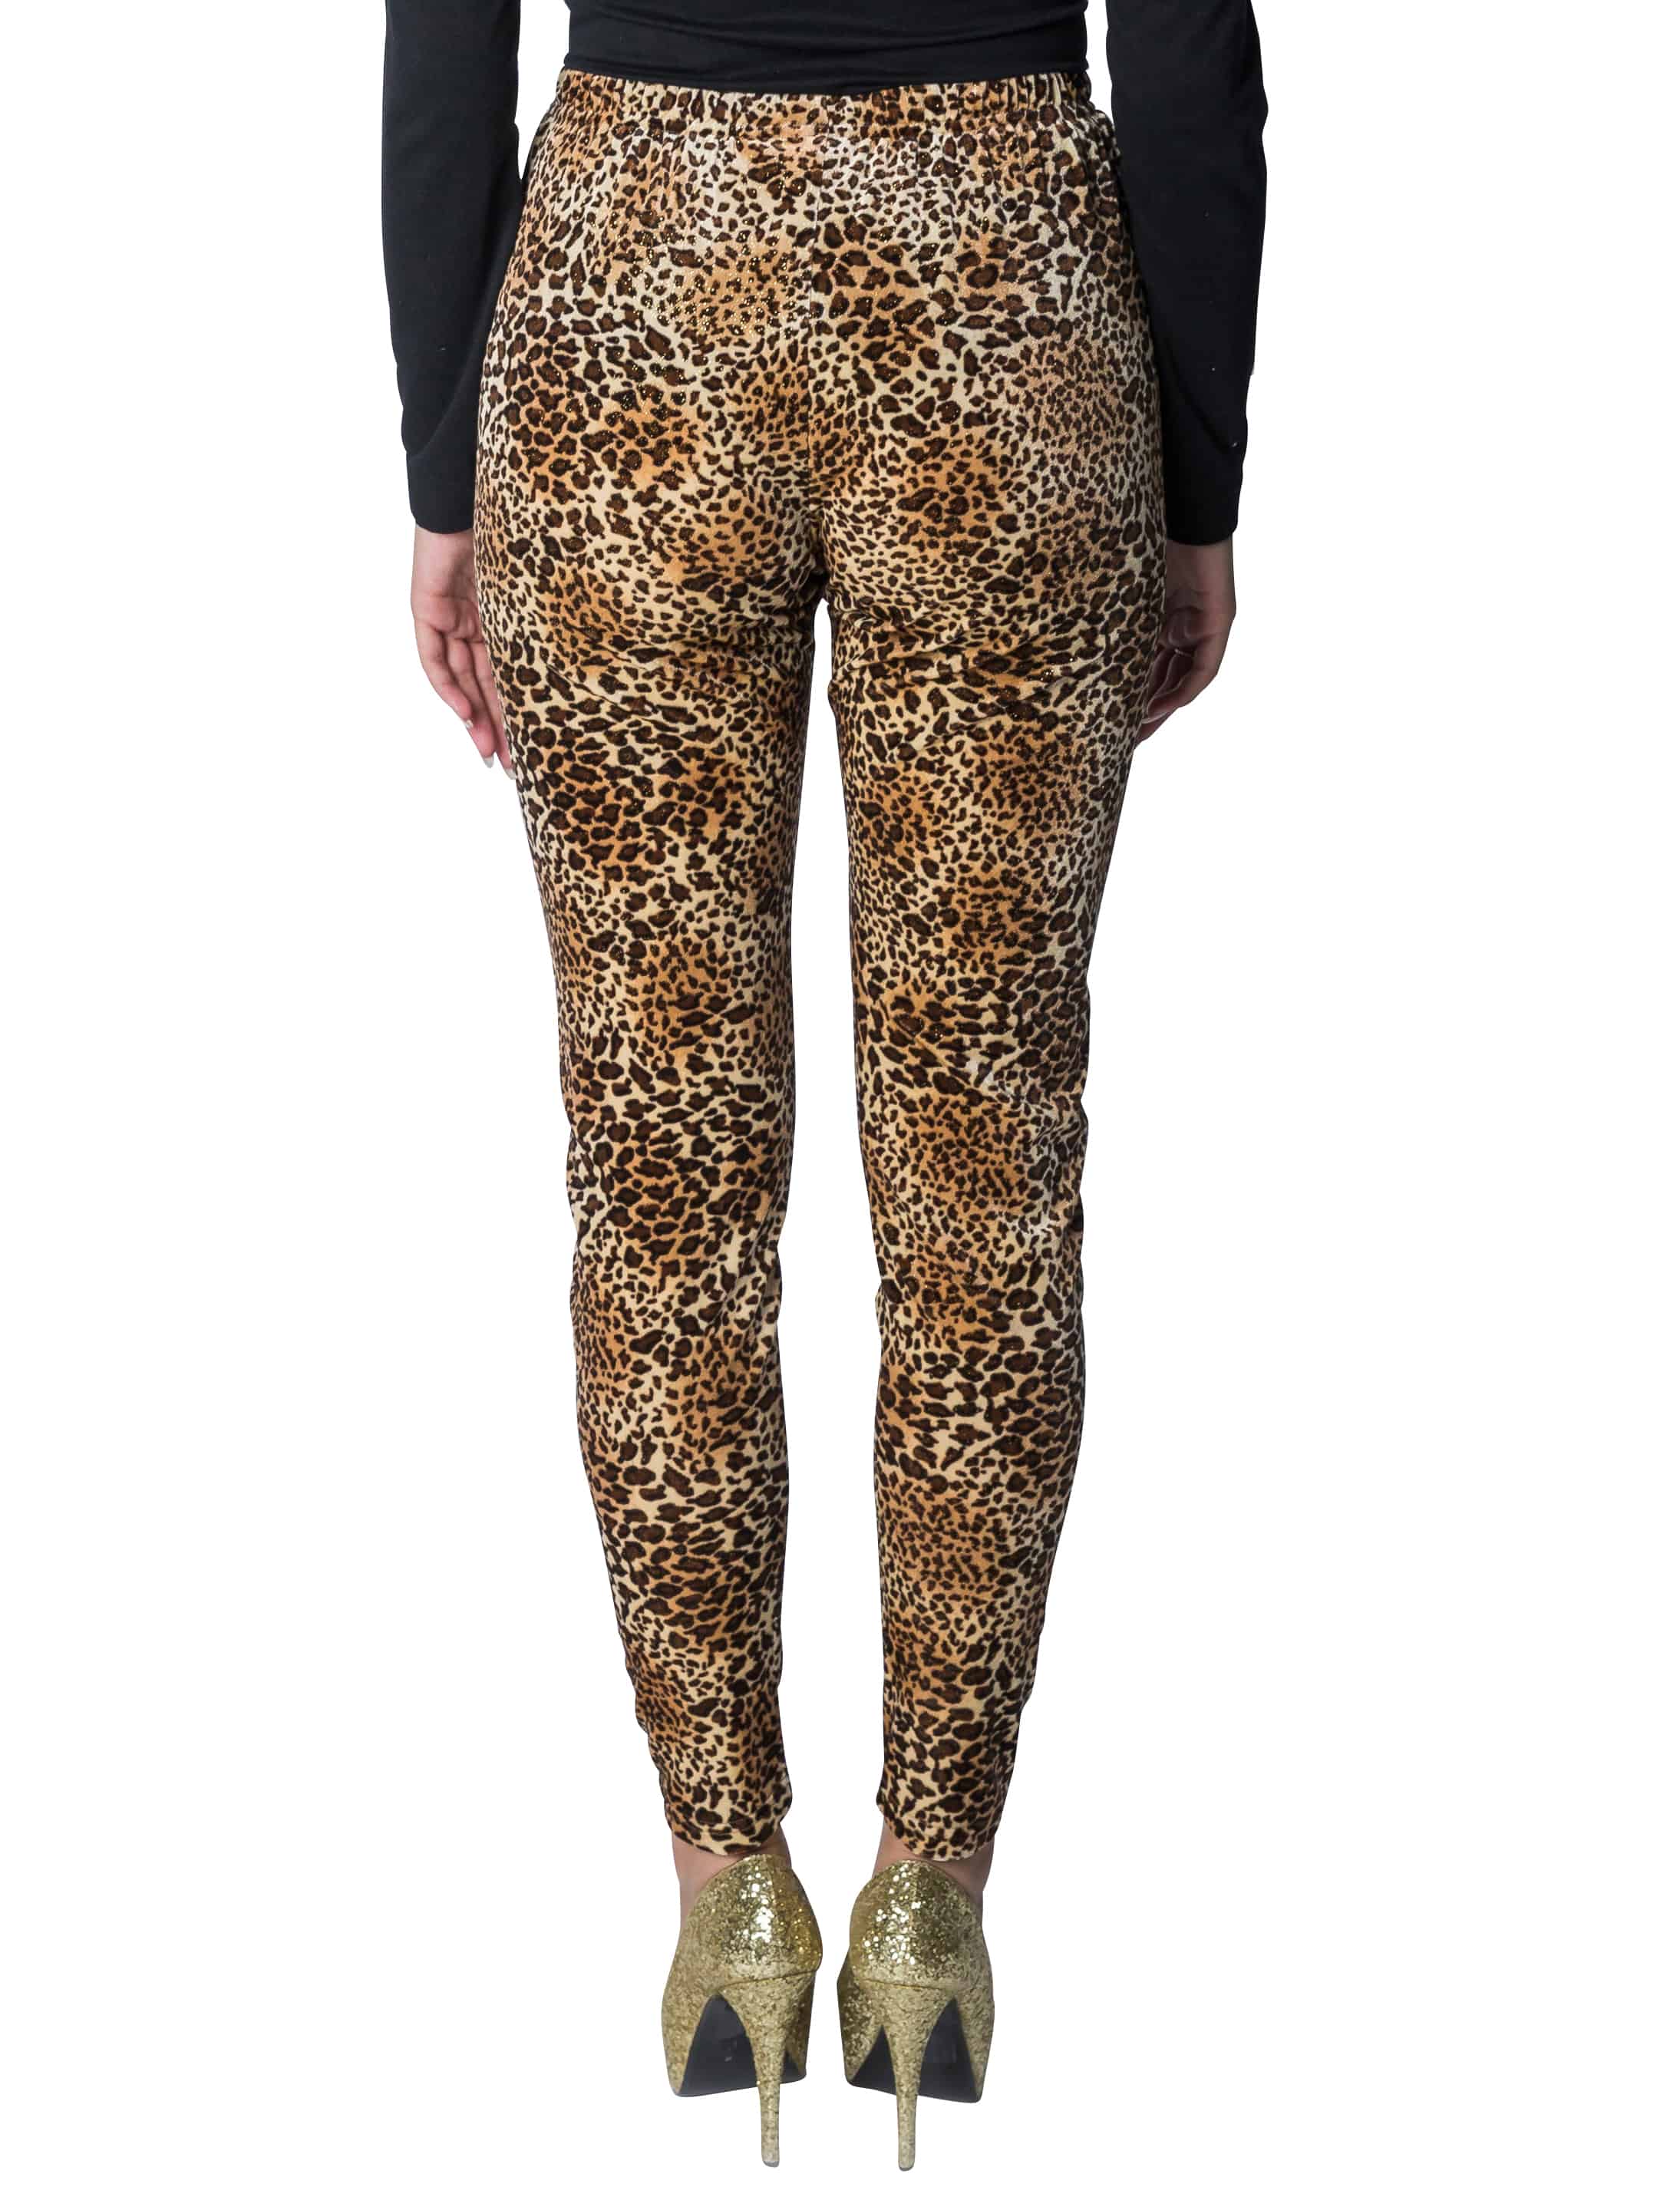 Leggings Leopard schwarz/braun S/M